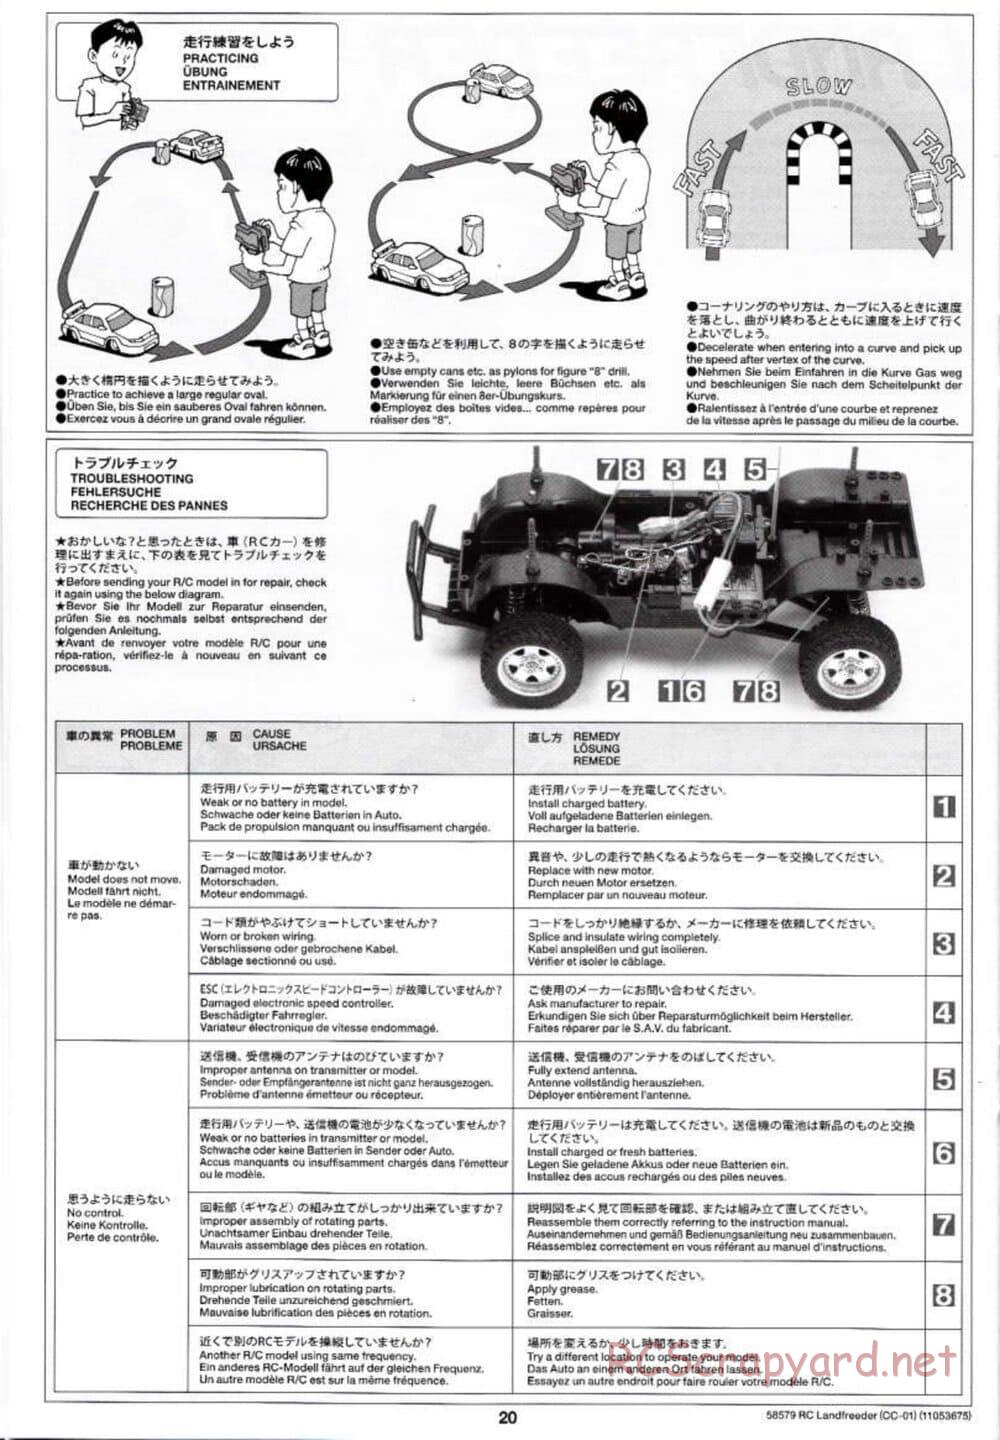 Tamiya - LandFreeder - CC-01 Chassis - Manual - Page 20